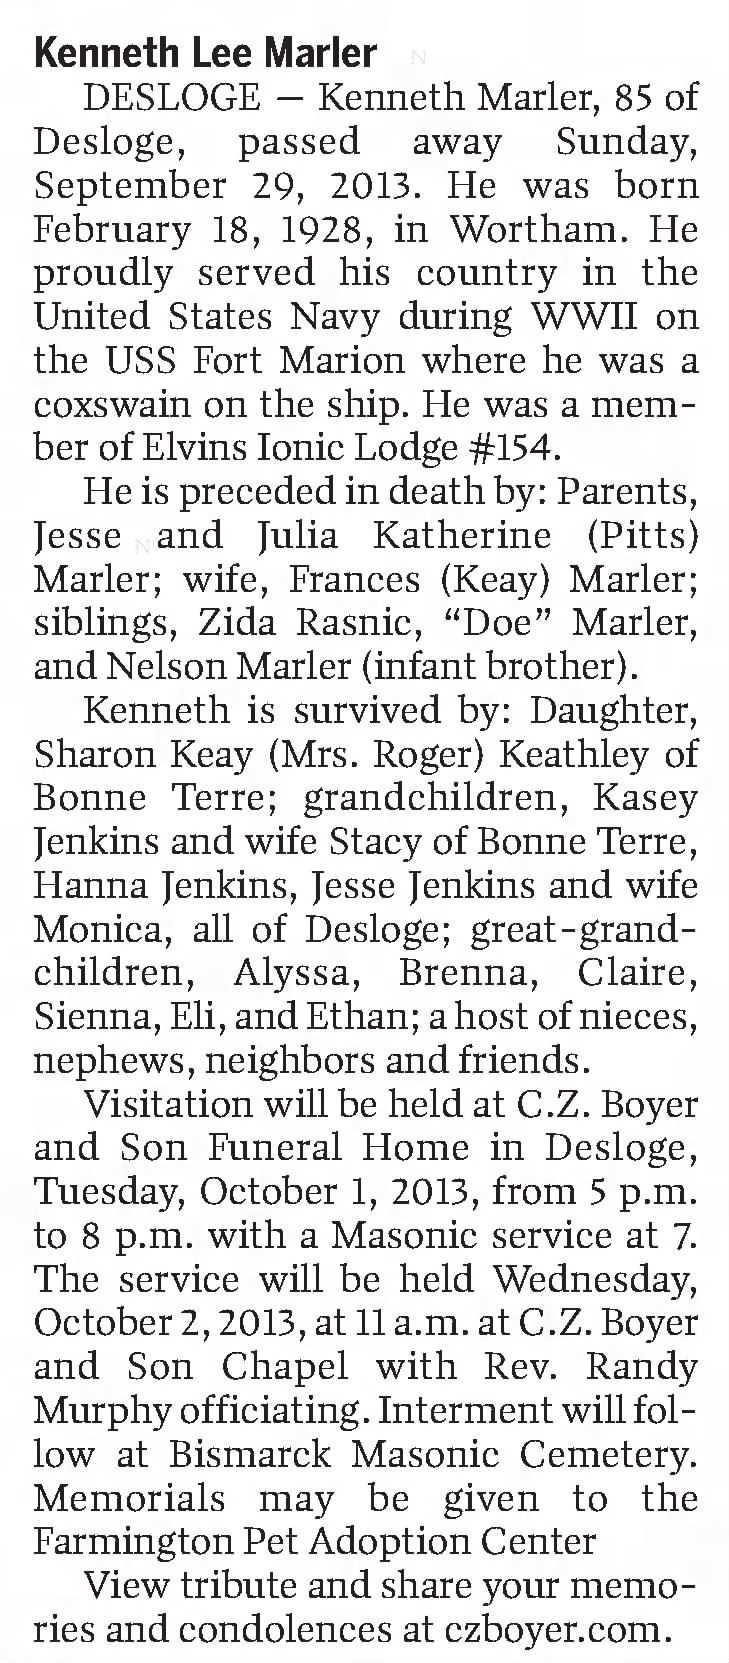 Obituary for Kenneth Lee Marler, 1928-2013 (Aged 85)